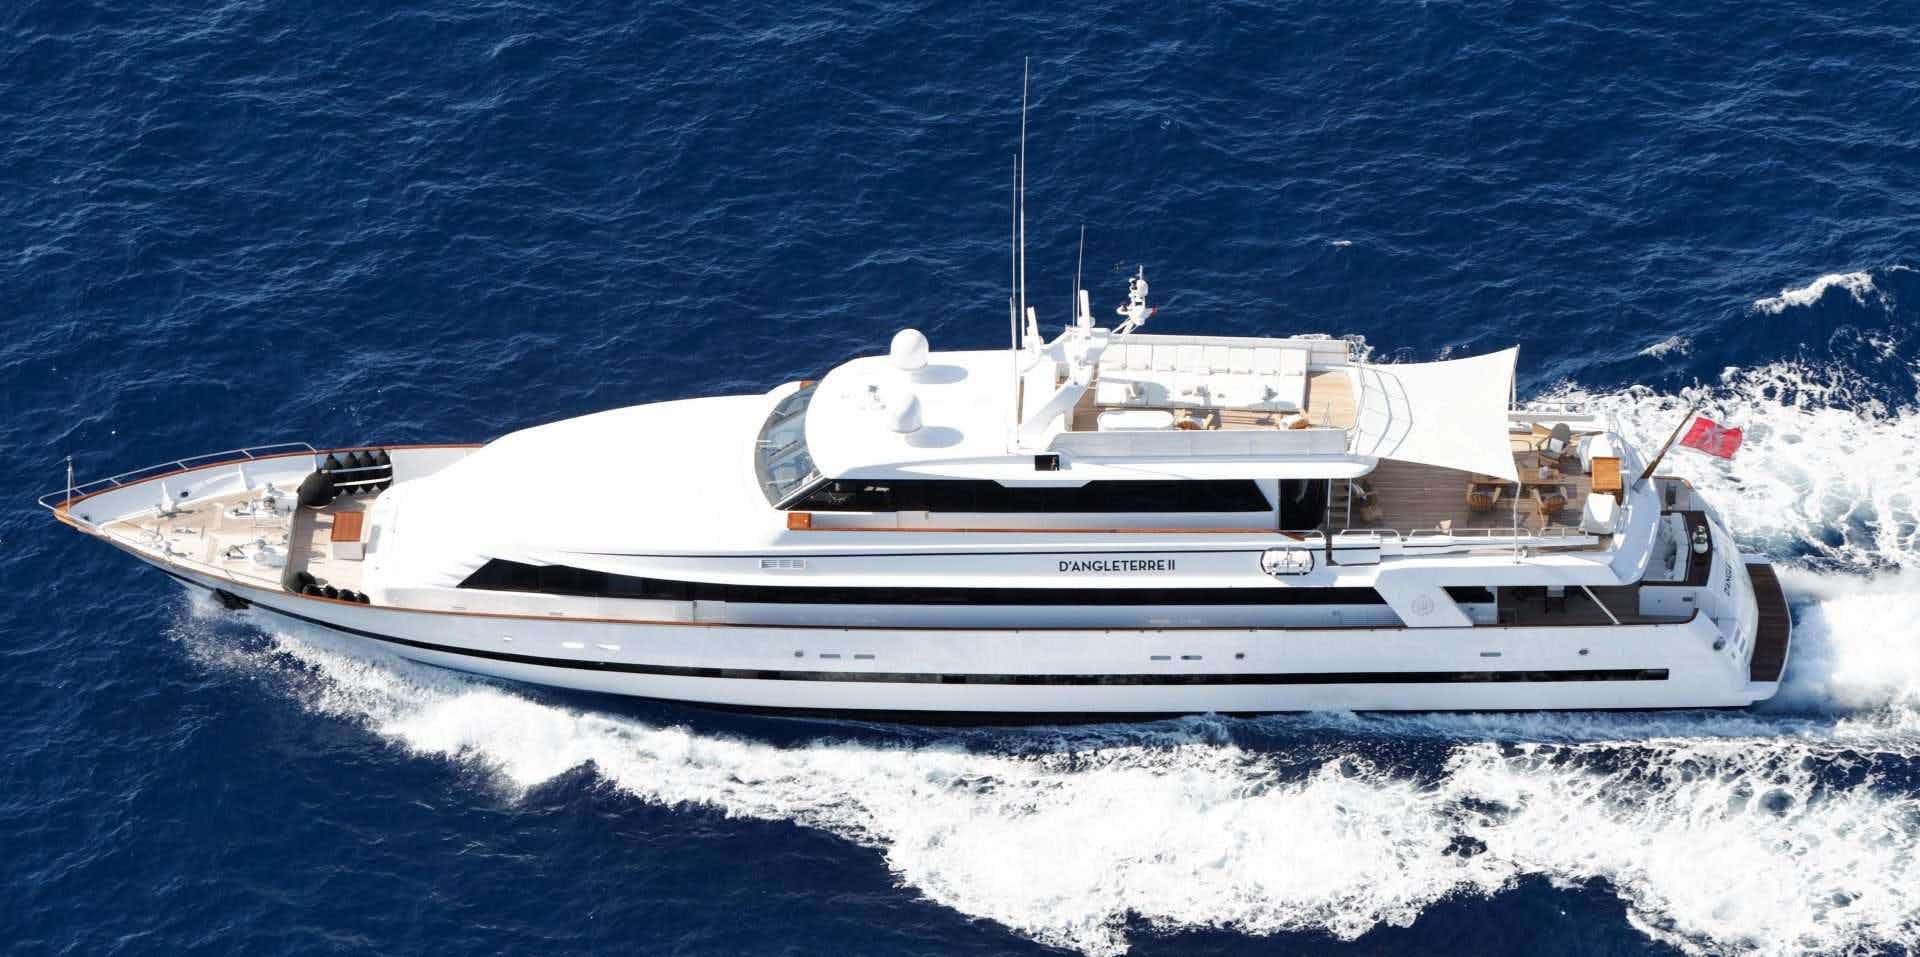 SEA LADY II - Motor Boat Charter Spain & Boat hire in W. Med -Naples/Sicily, W. Med -Riviera/Cors/Sard., W. Med - Spain/Balearics 1